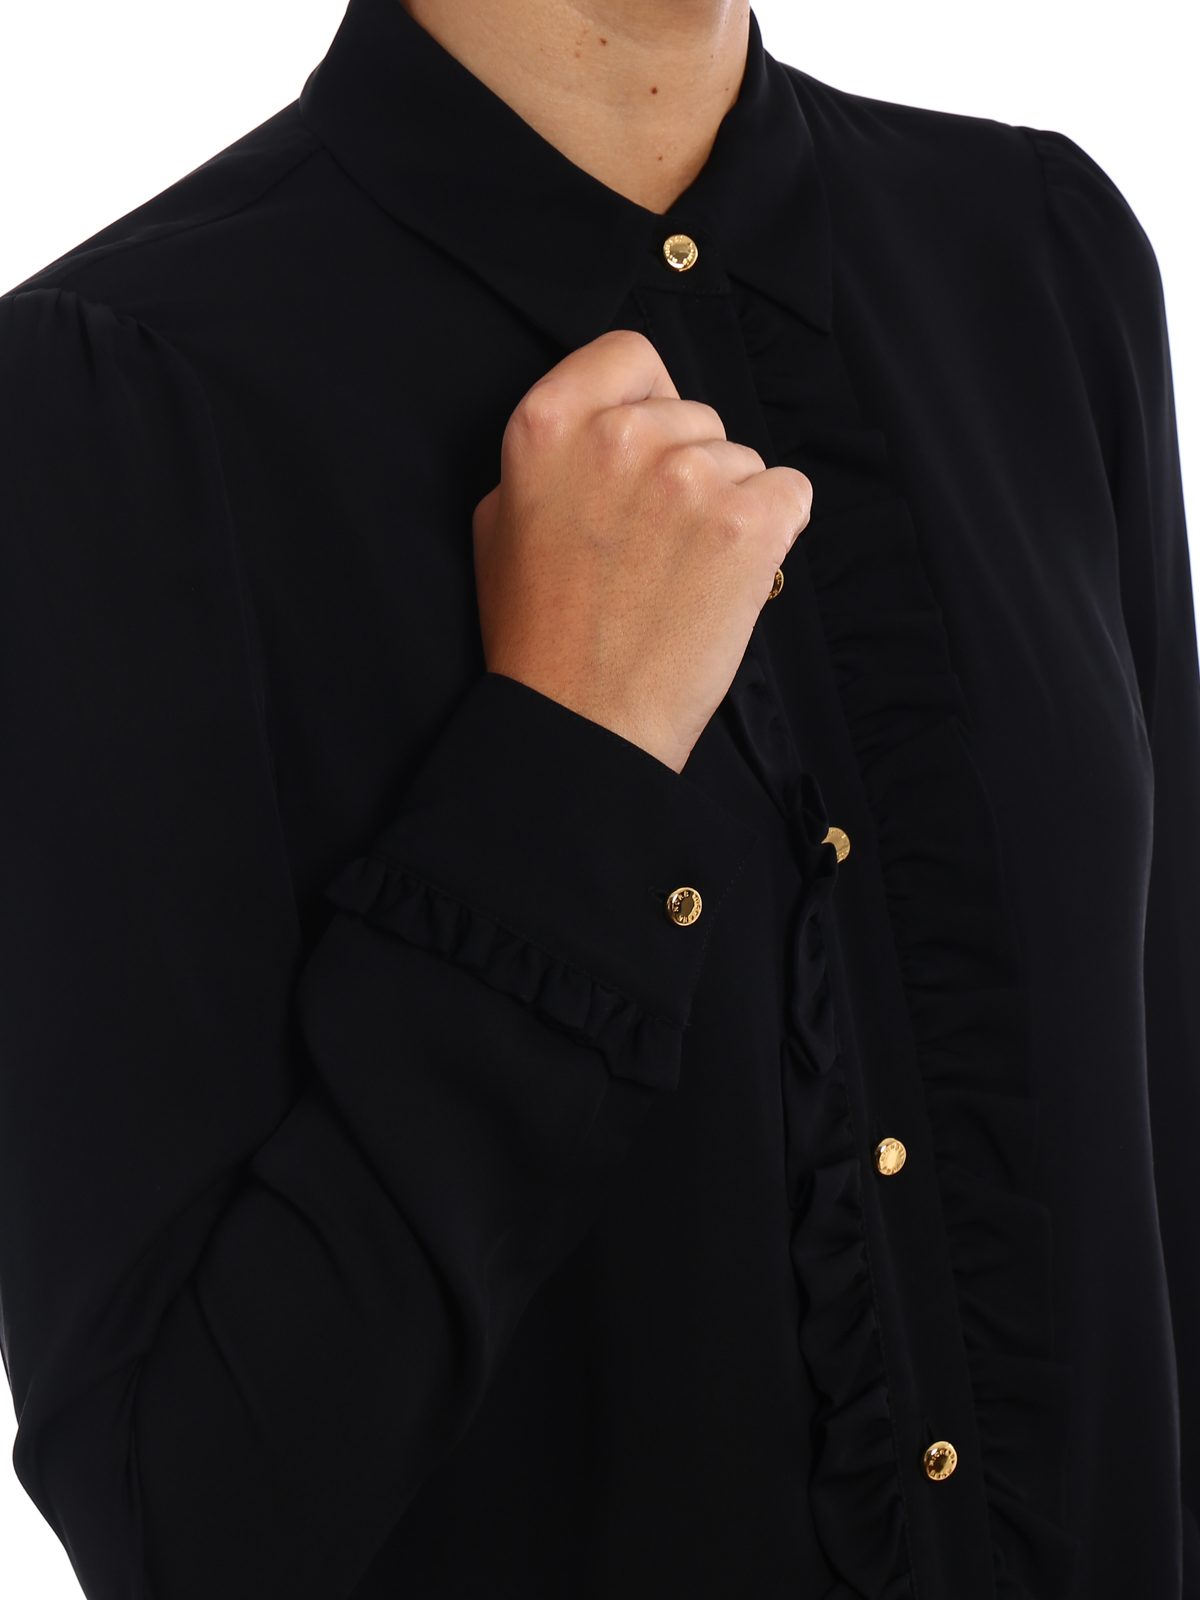 michael kors black shirt